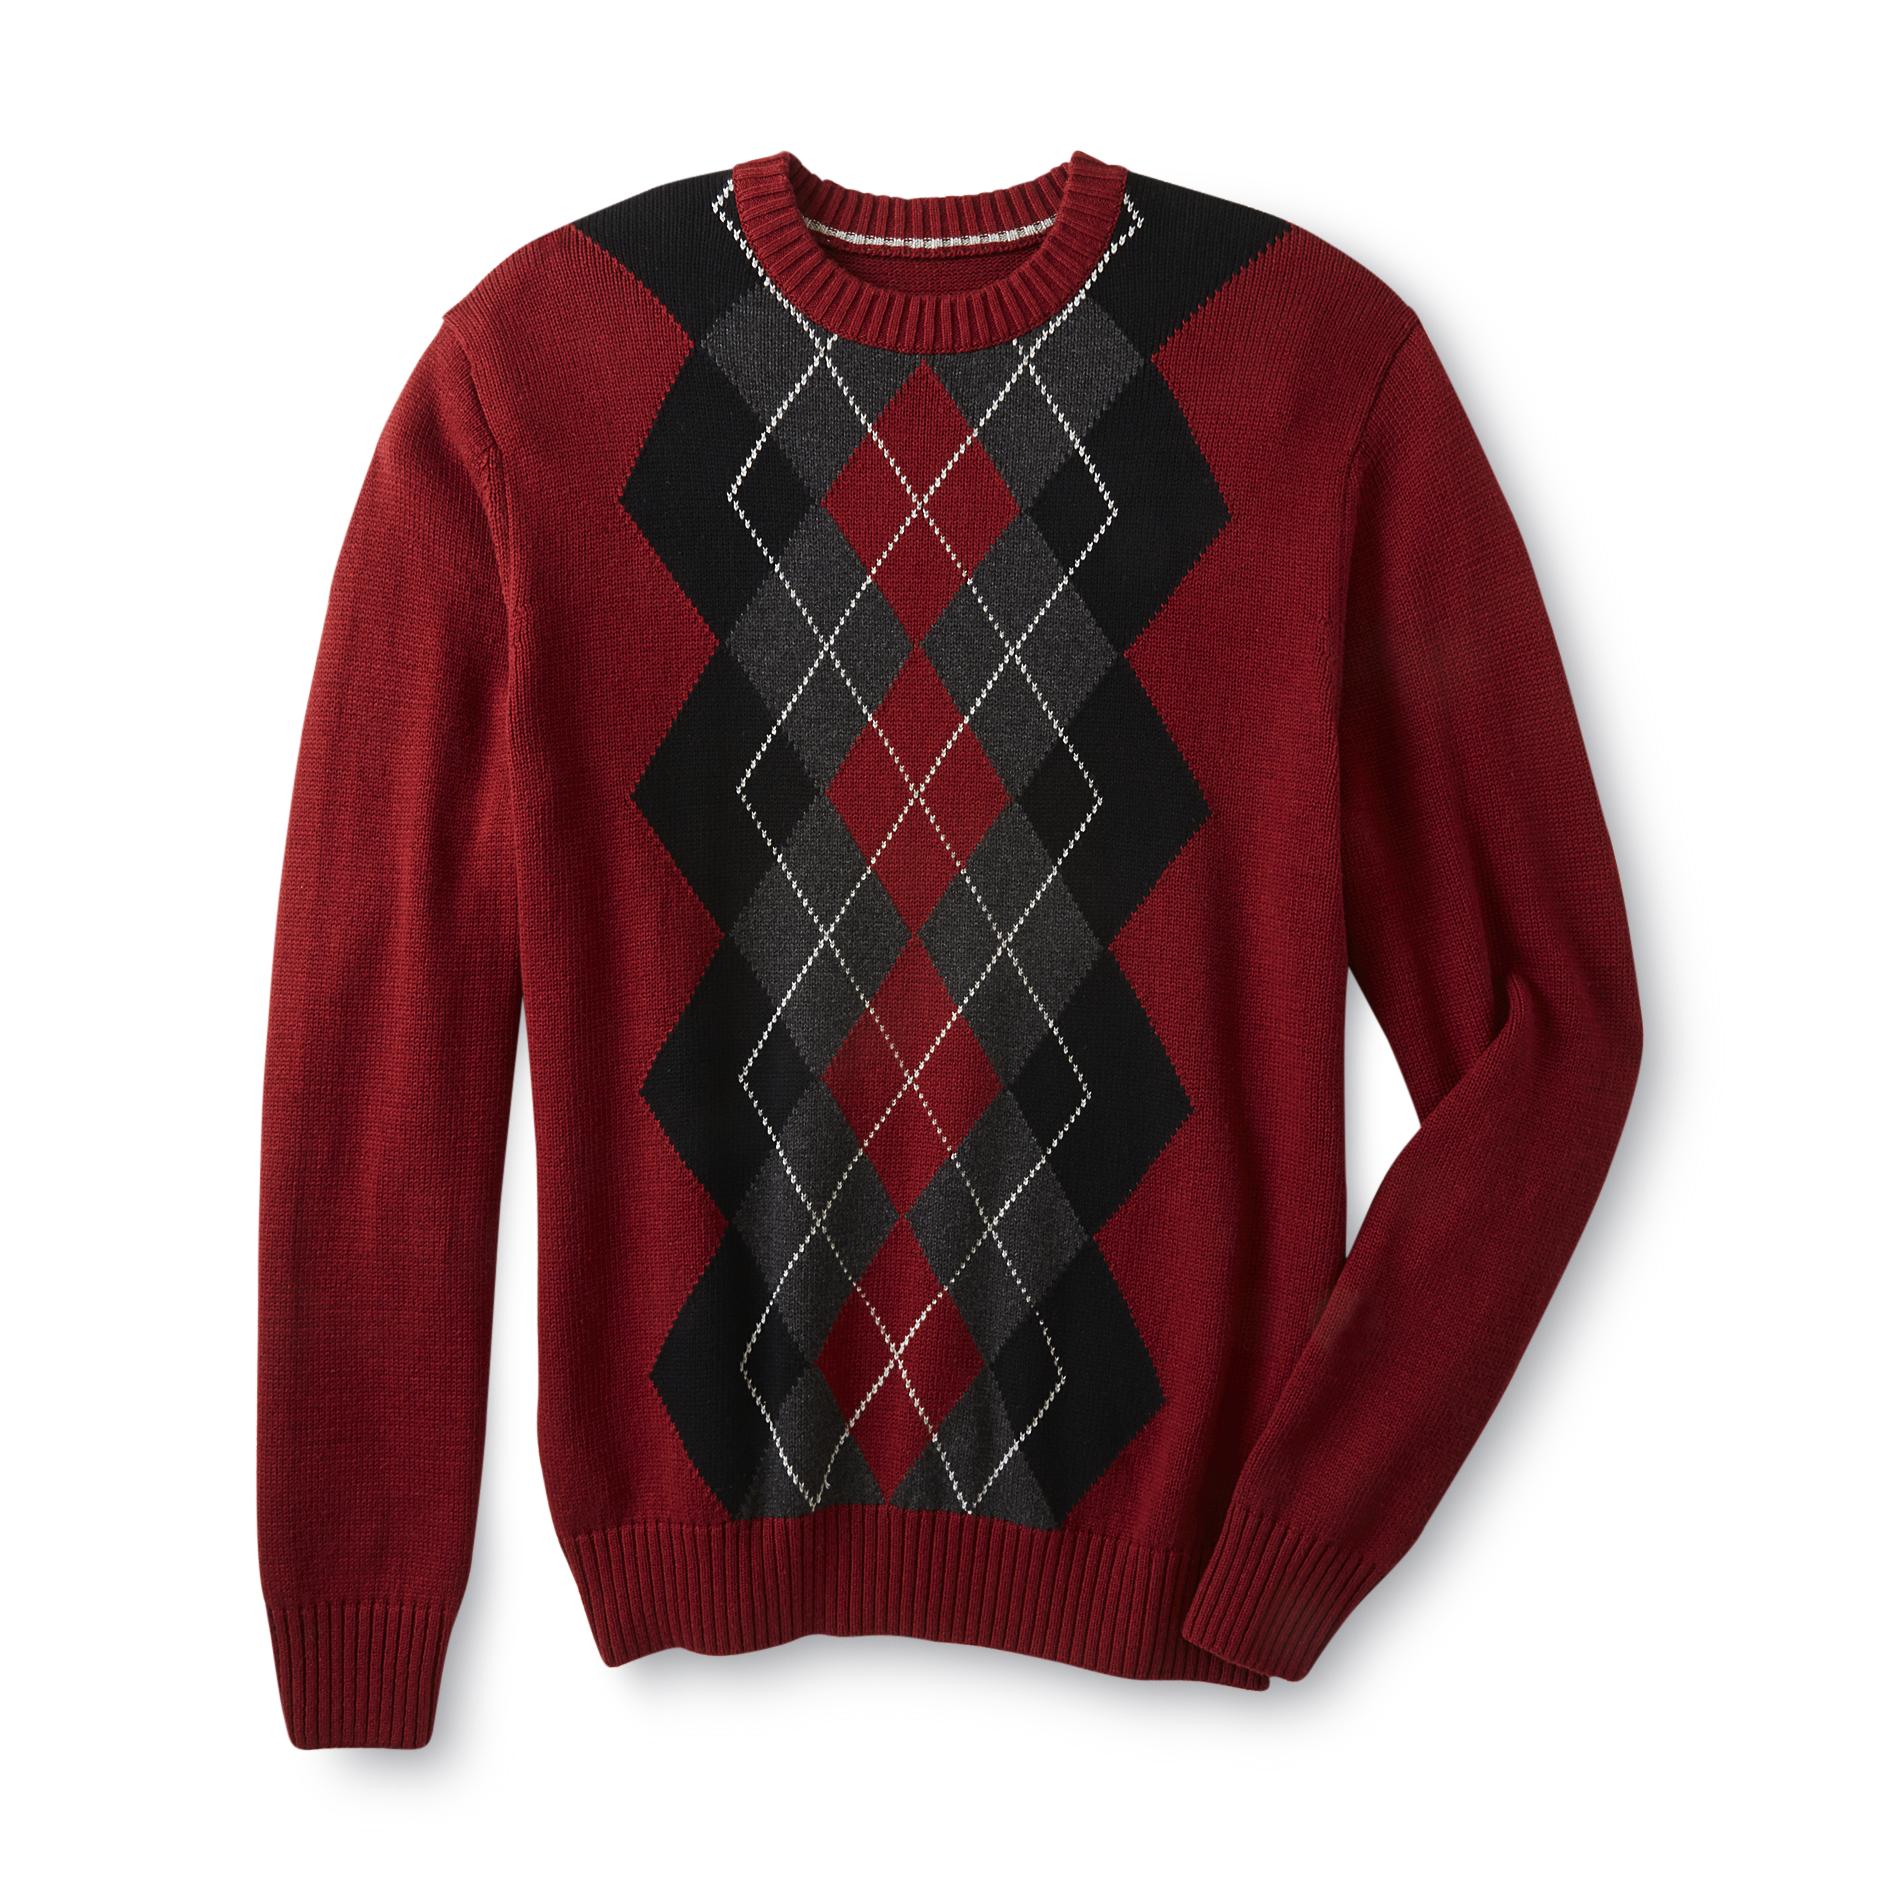 David Taylor Collection Men's Sweater - Argyle